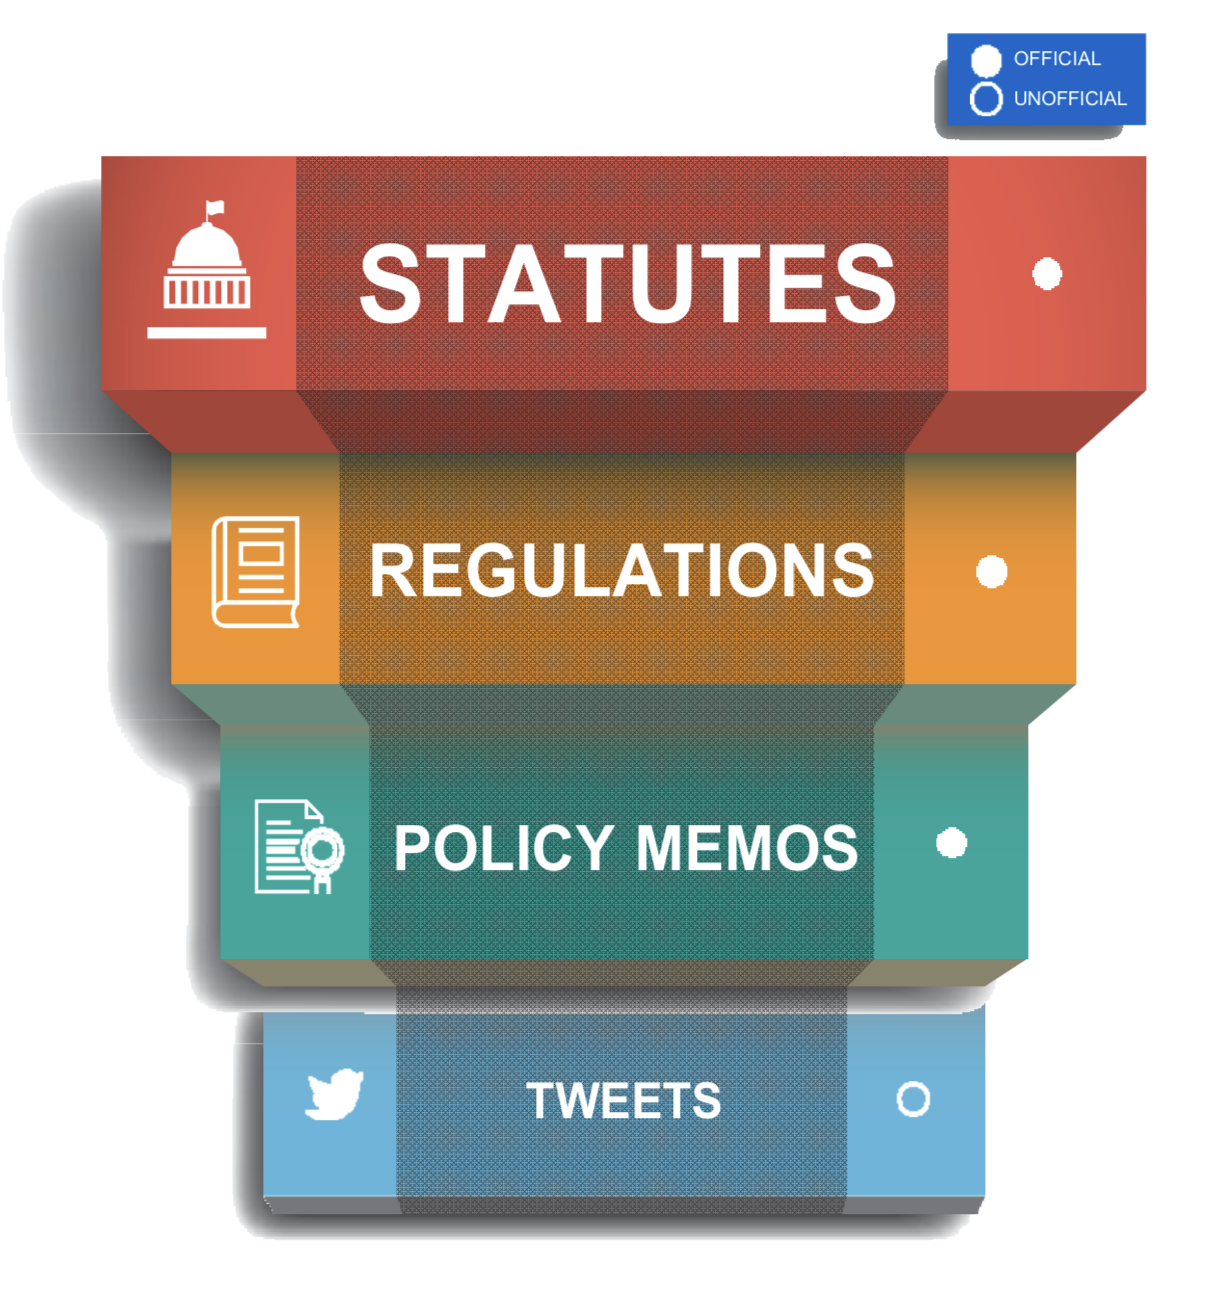 Statutes vs. Regulations vs. Memos vs. Tweets in Immigration Law